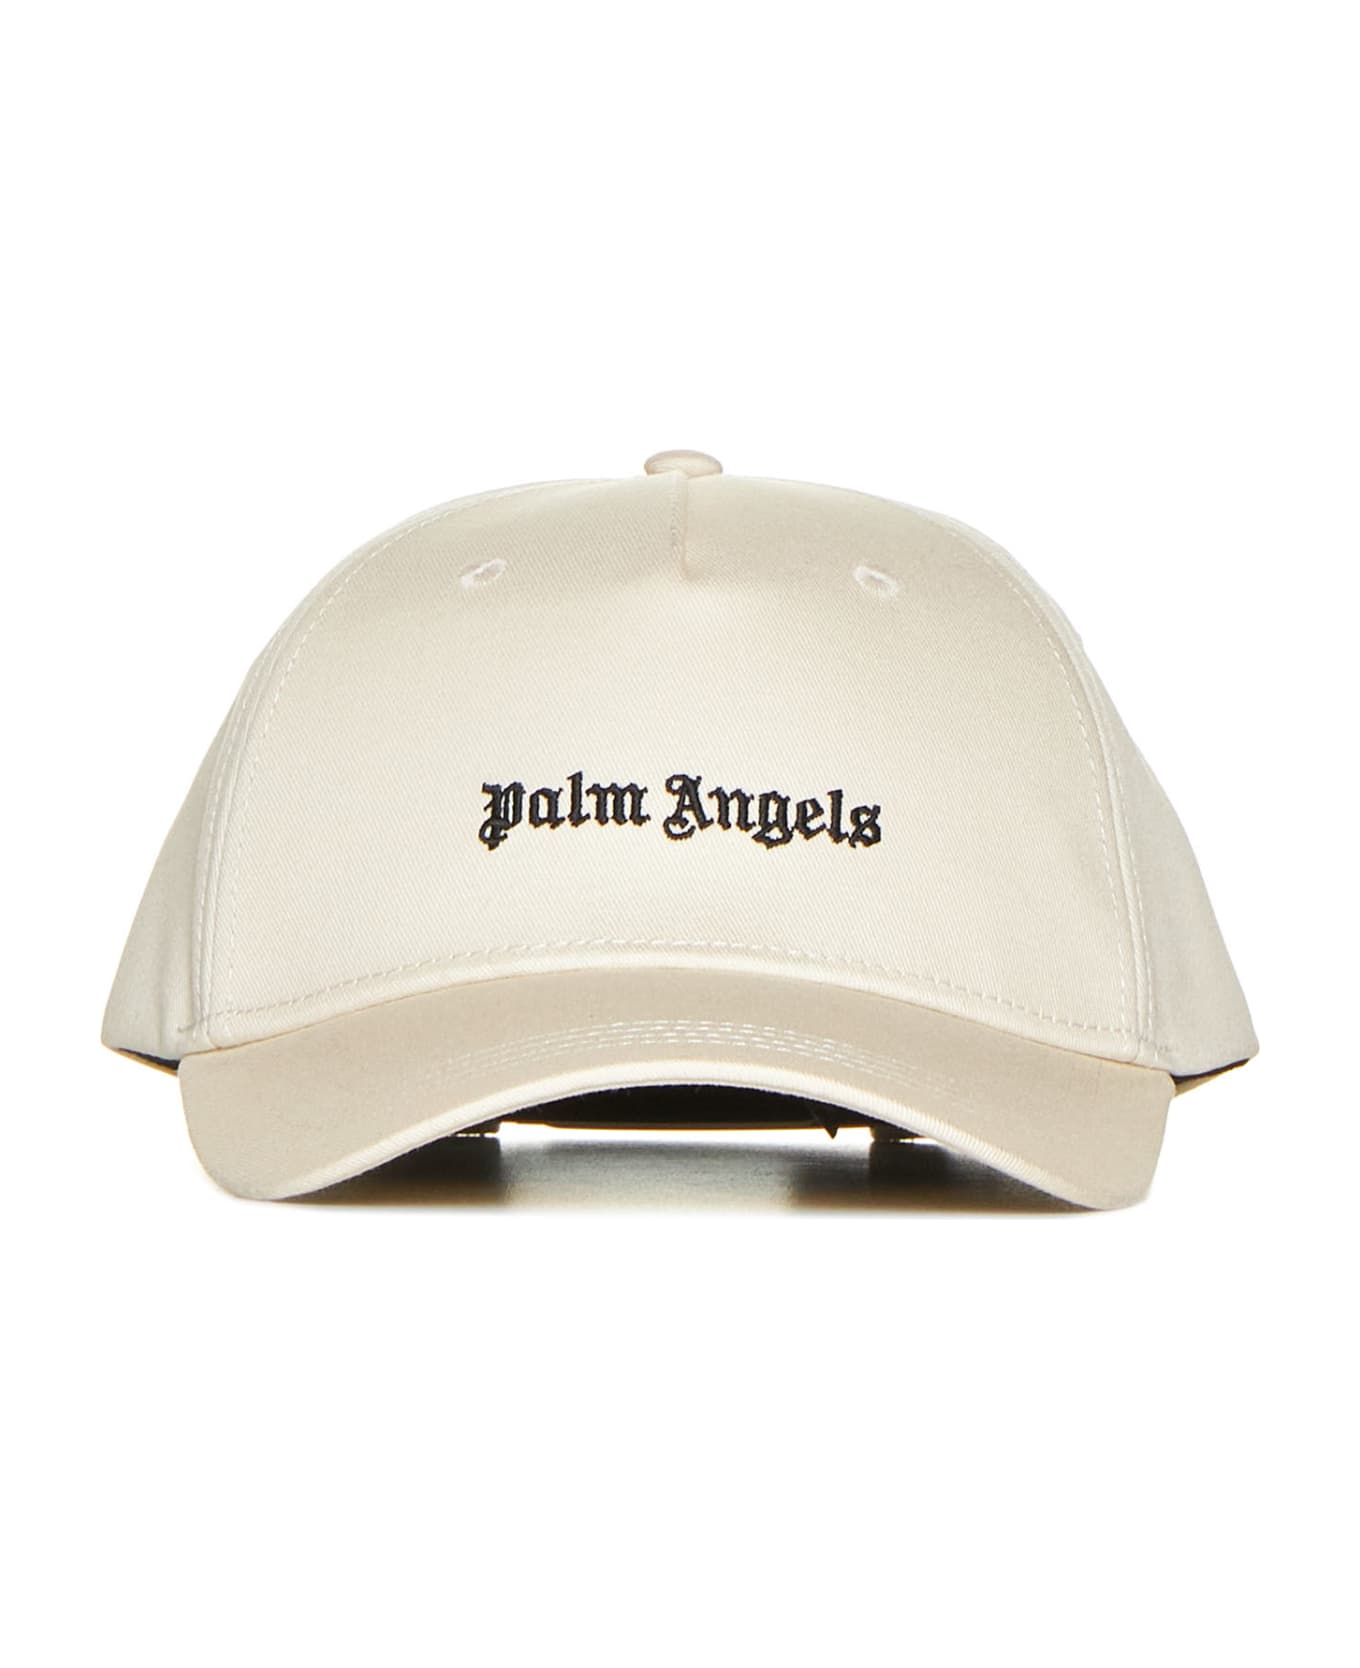 Palm Angels Classic Logo Cap - White